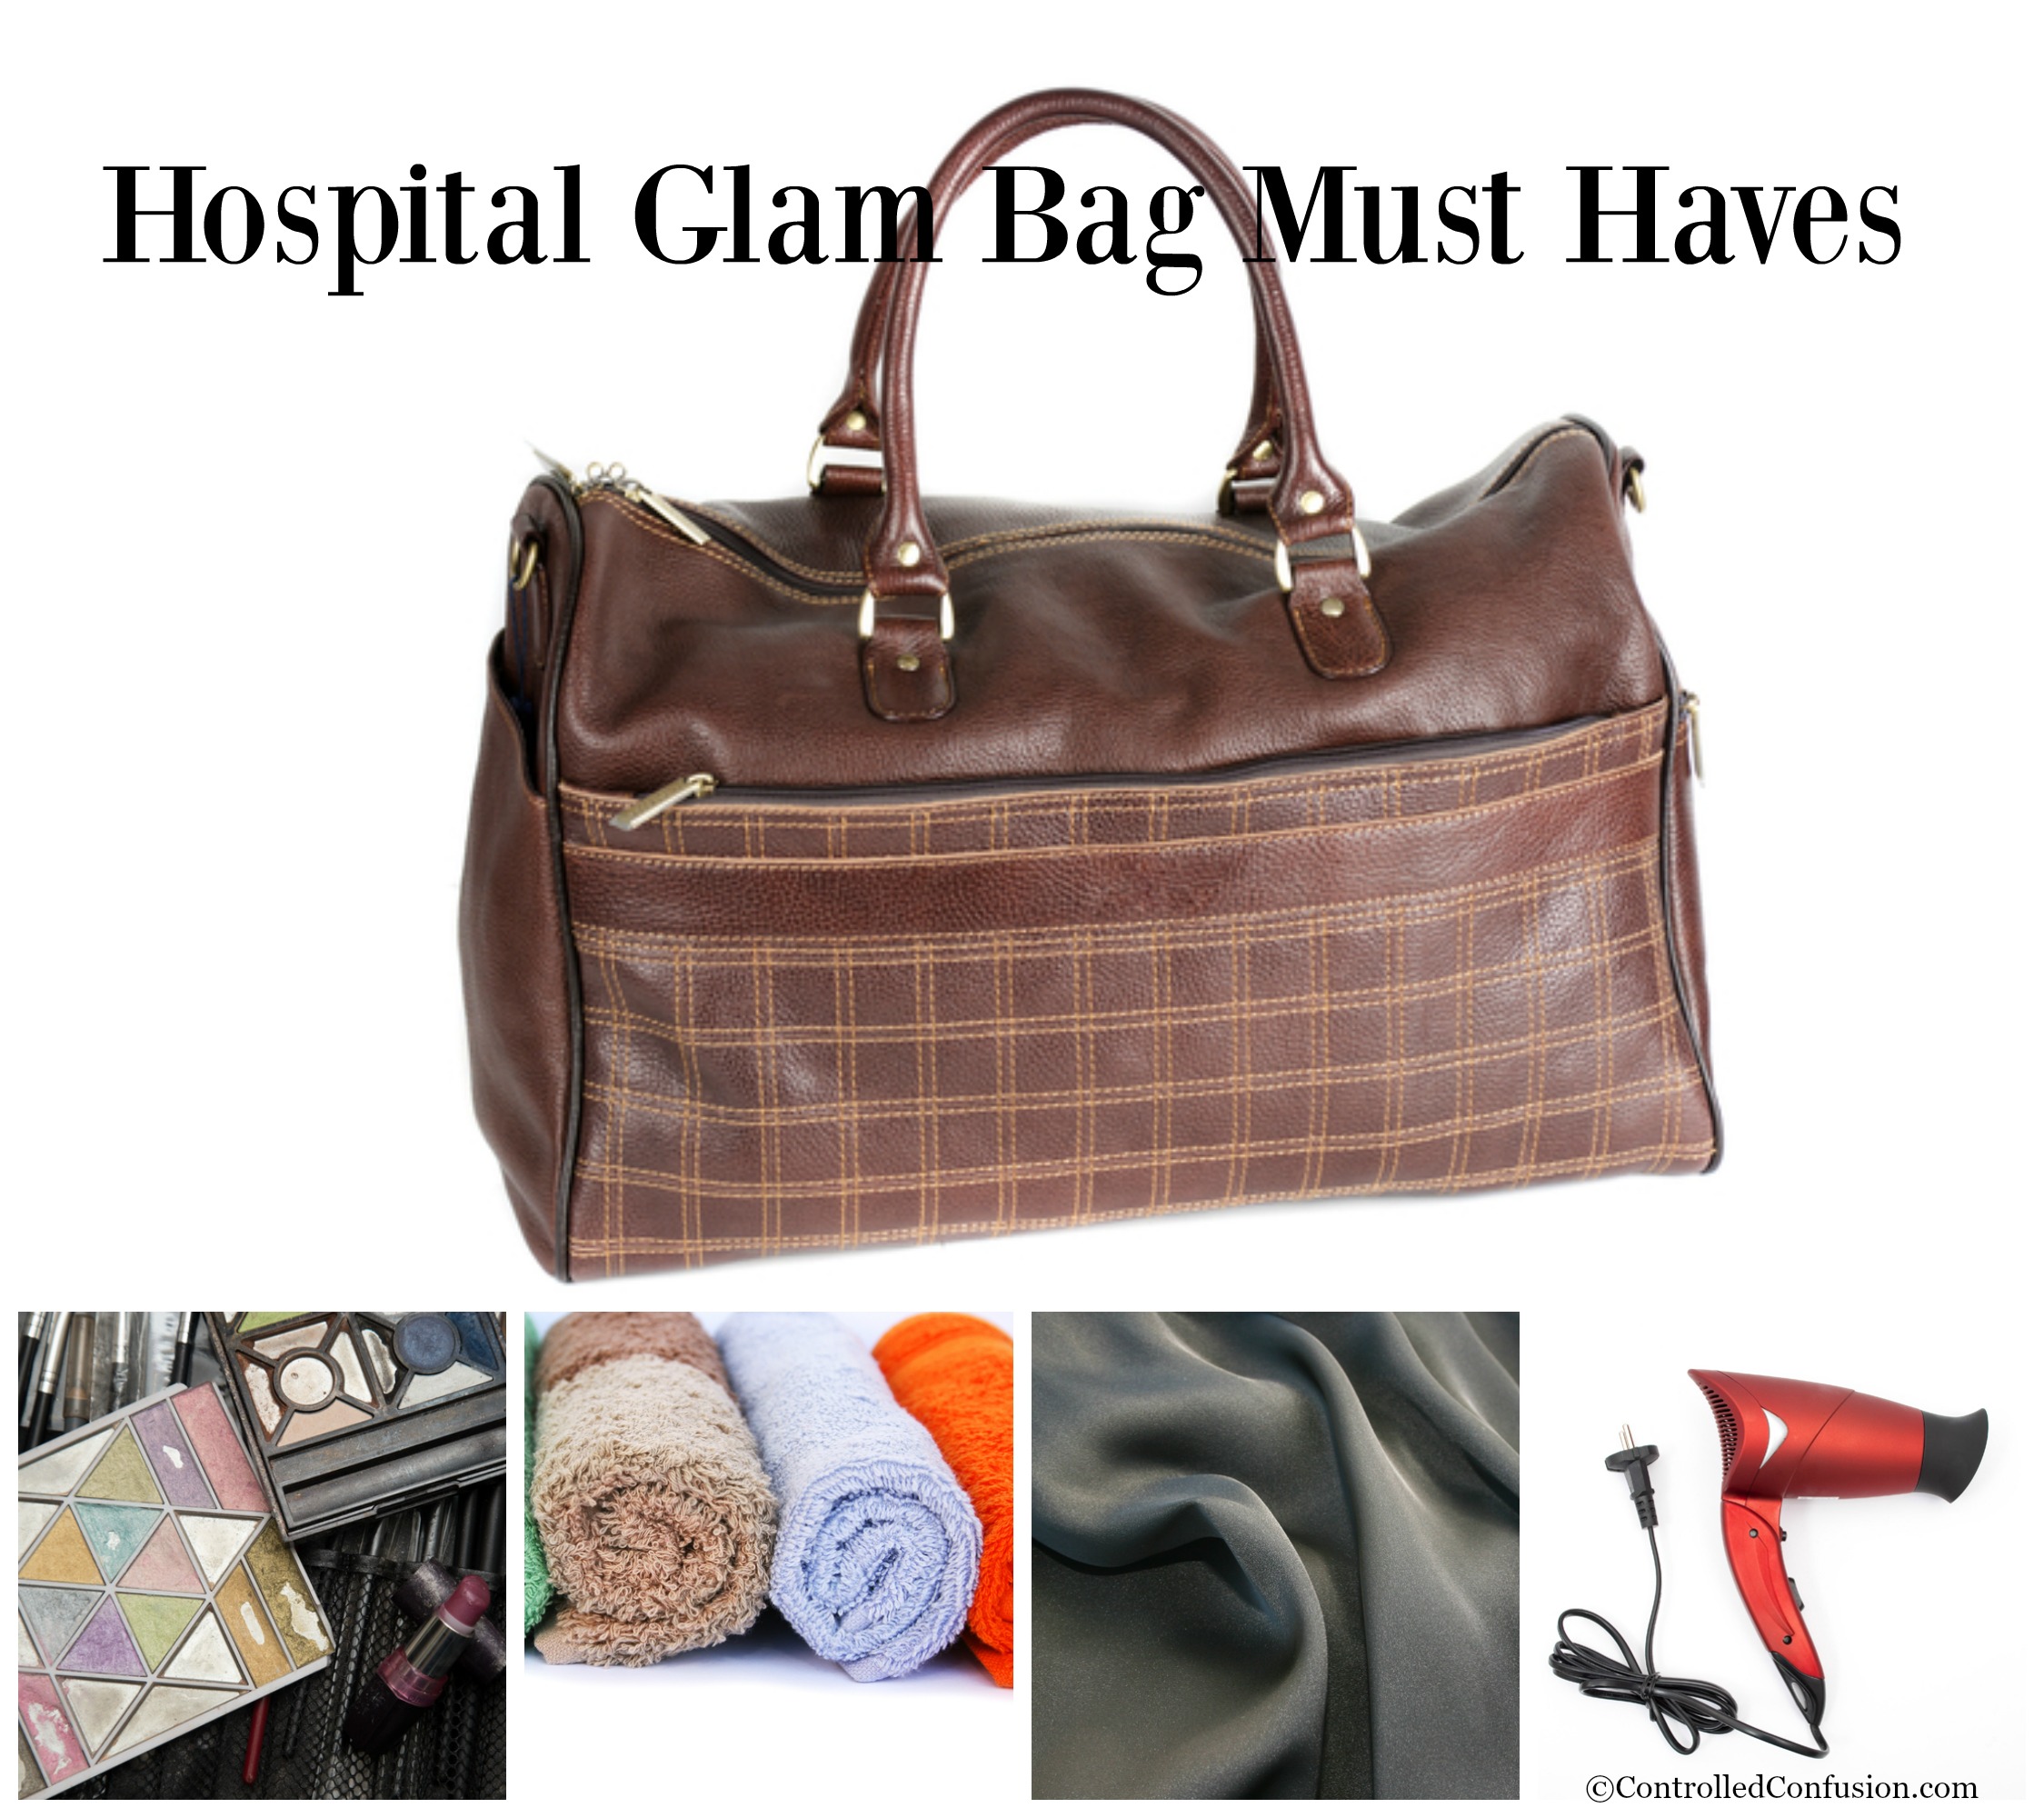 Hospital Glam Bag Must Haves